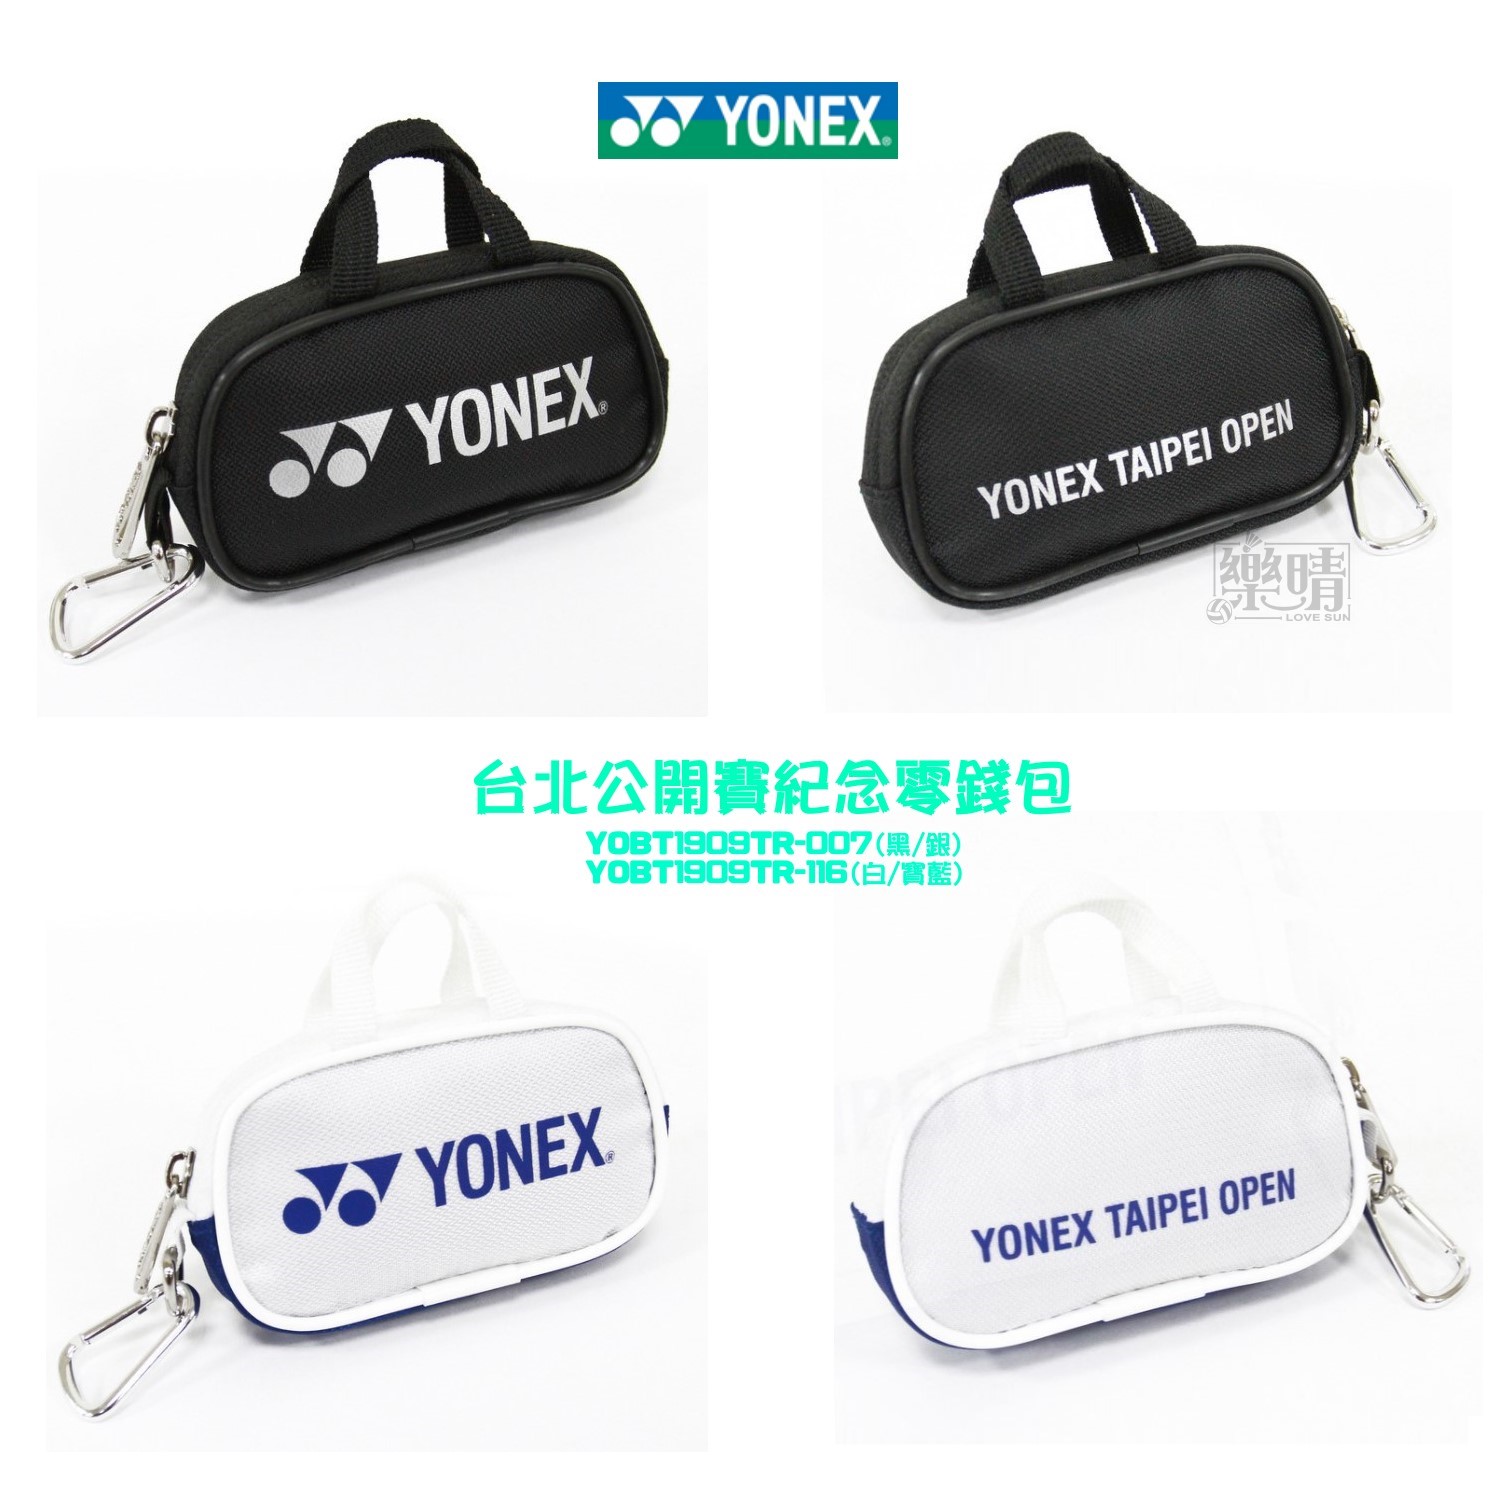 YONEX 零錢包 YOBT1909TR